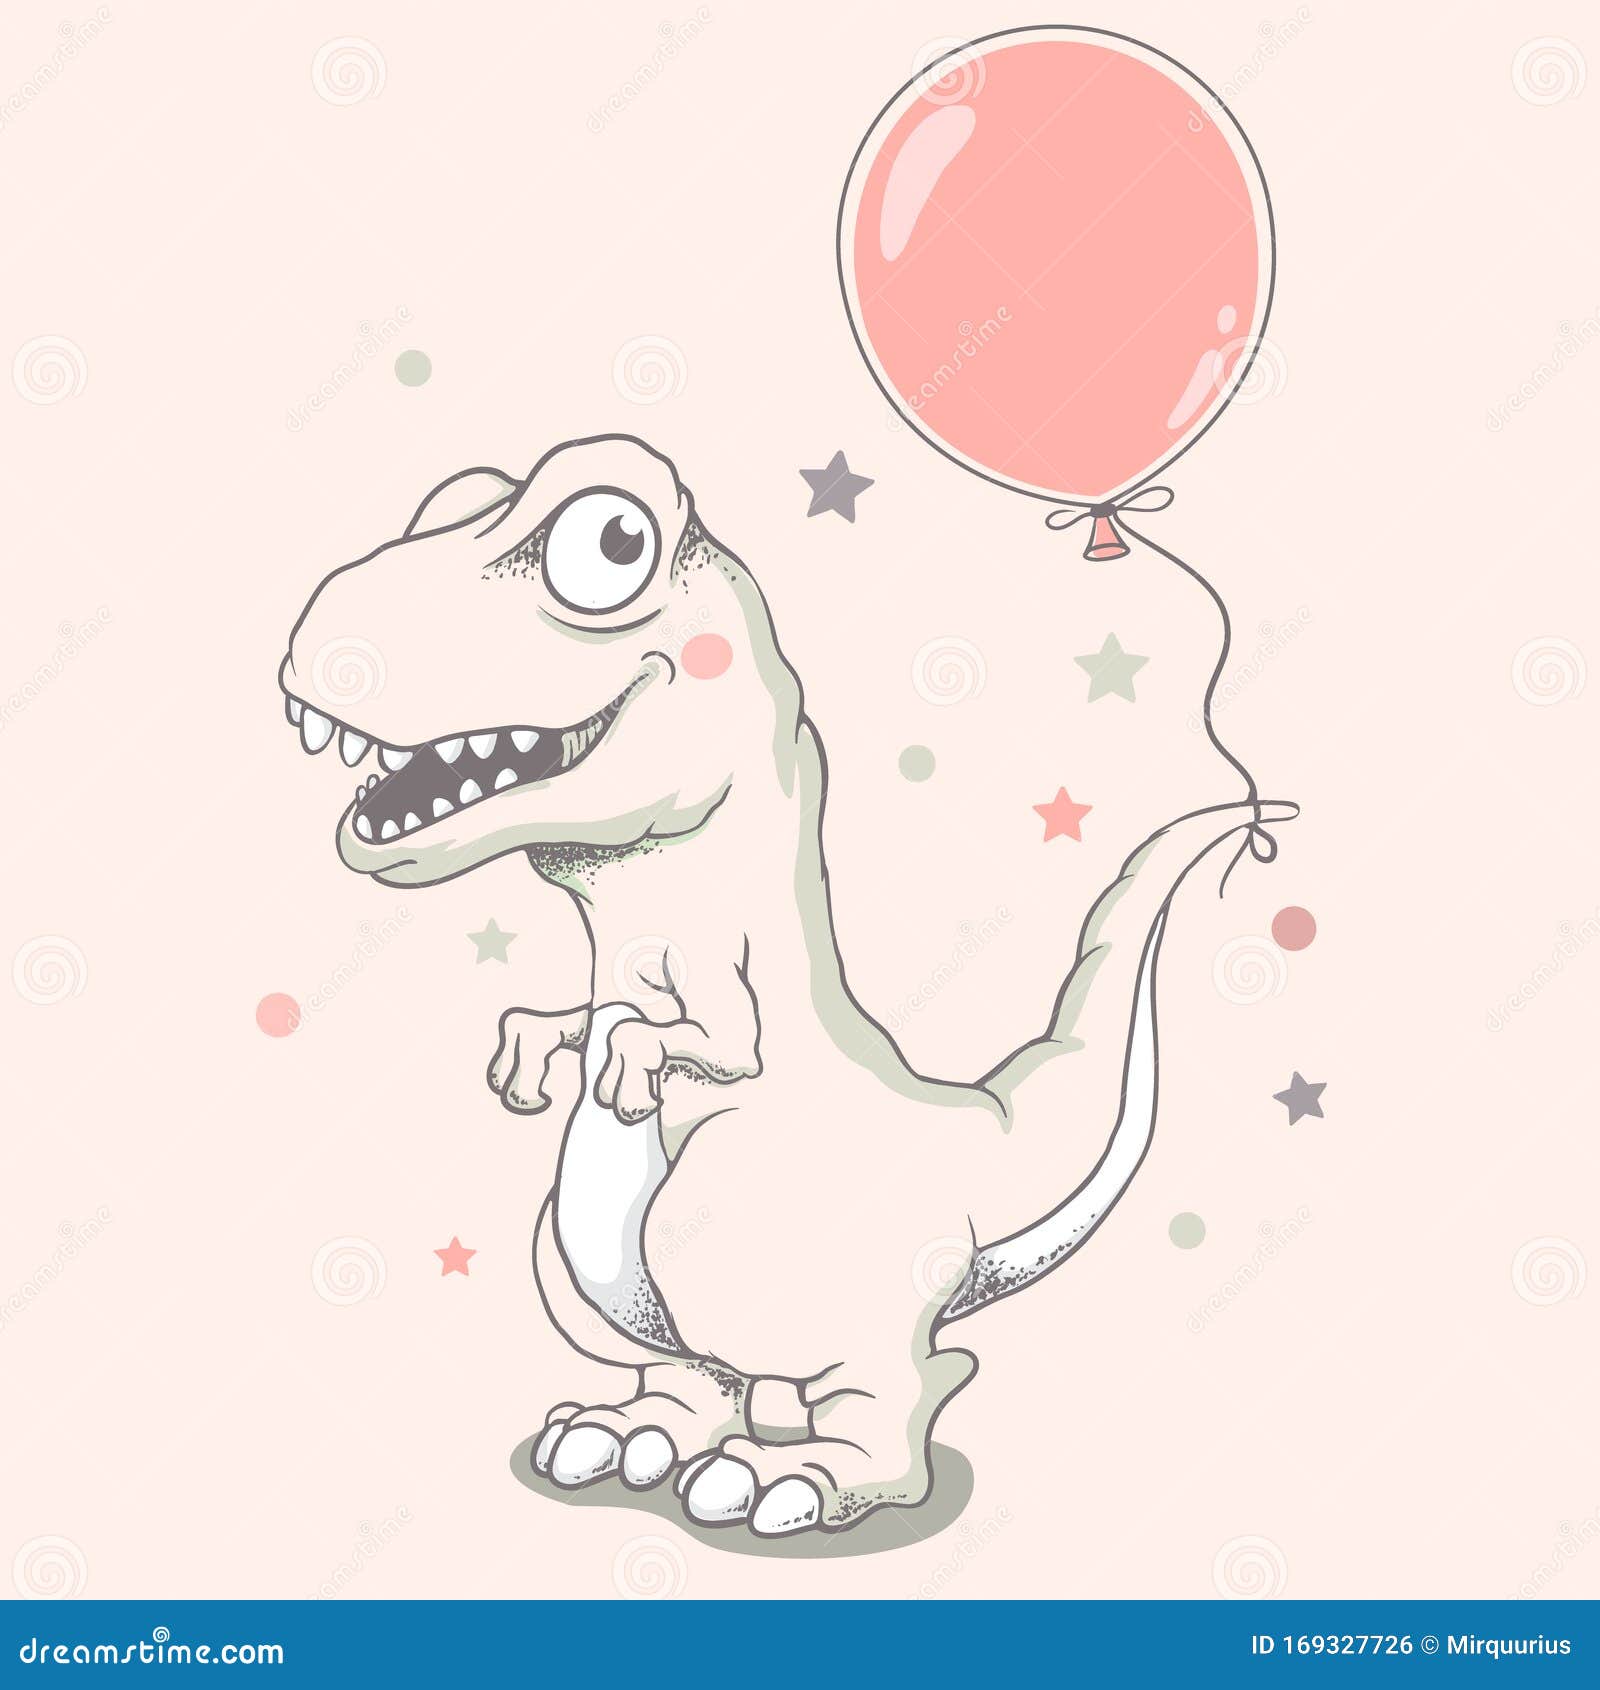 64683 Cartoon Baby Dinosaurs Images Stock Photos  Vectors  Shutterstock